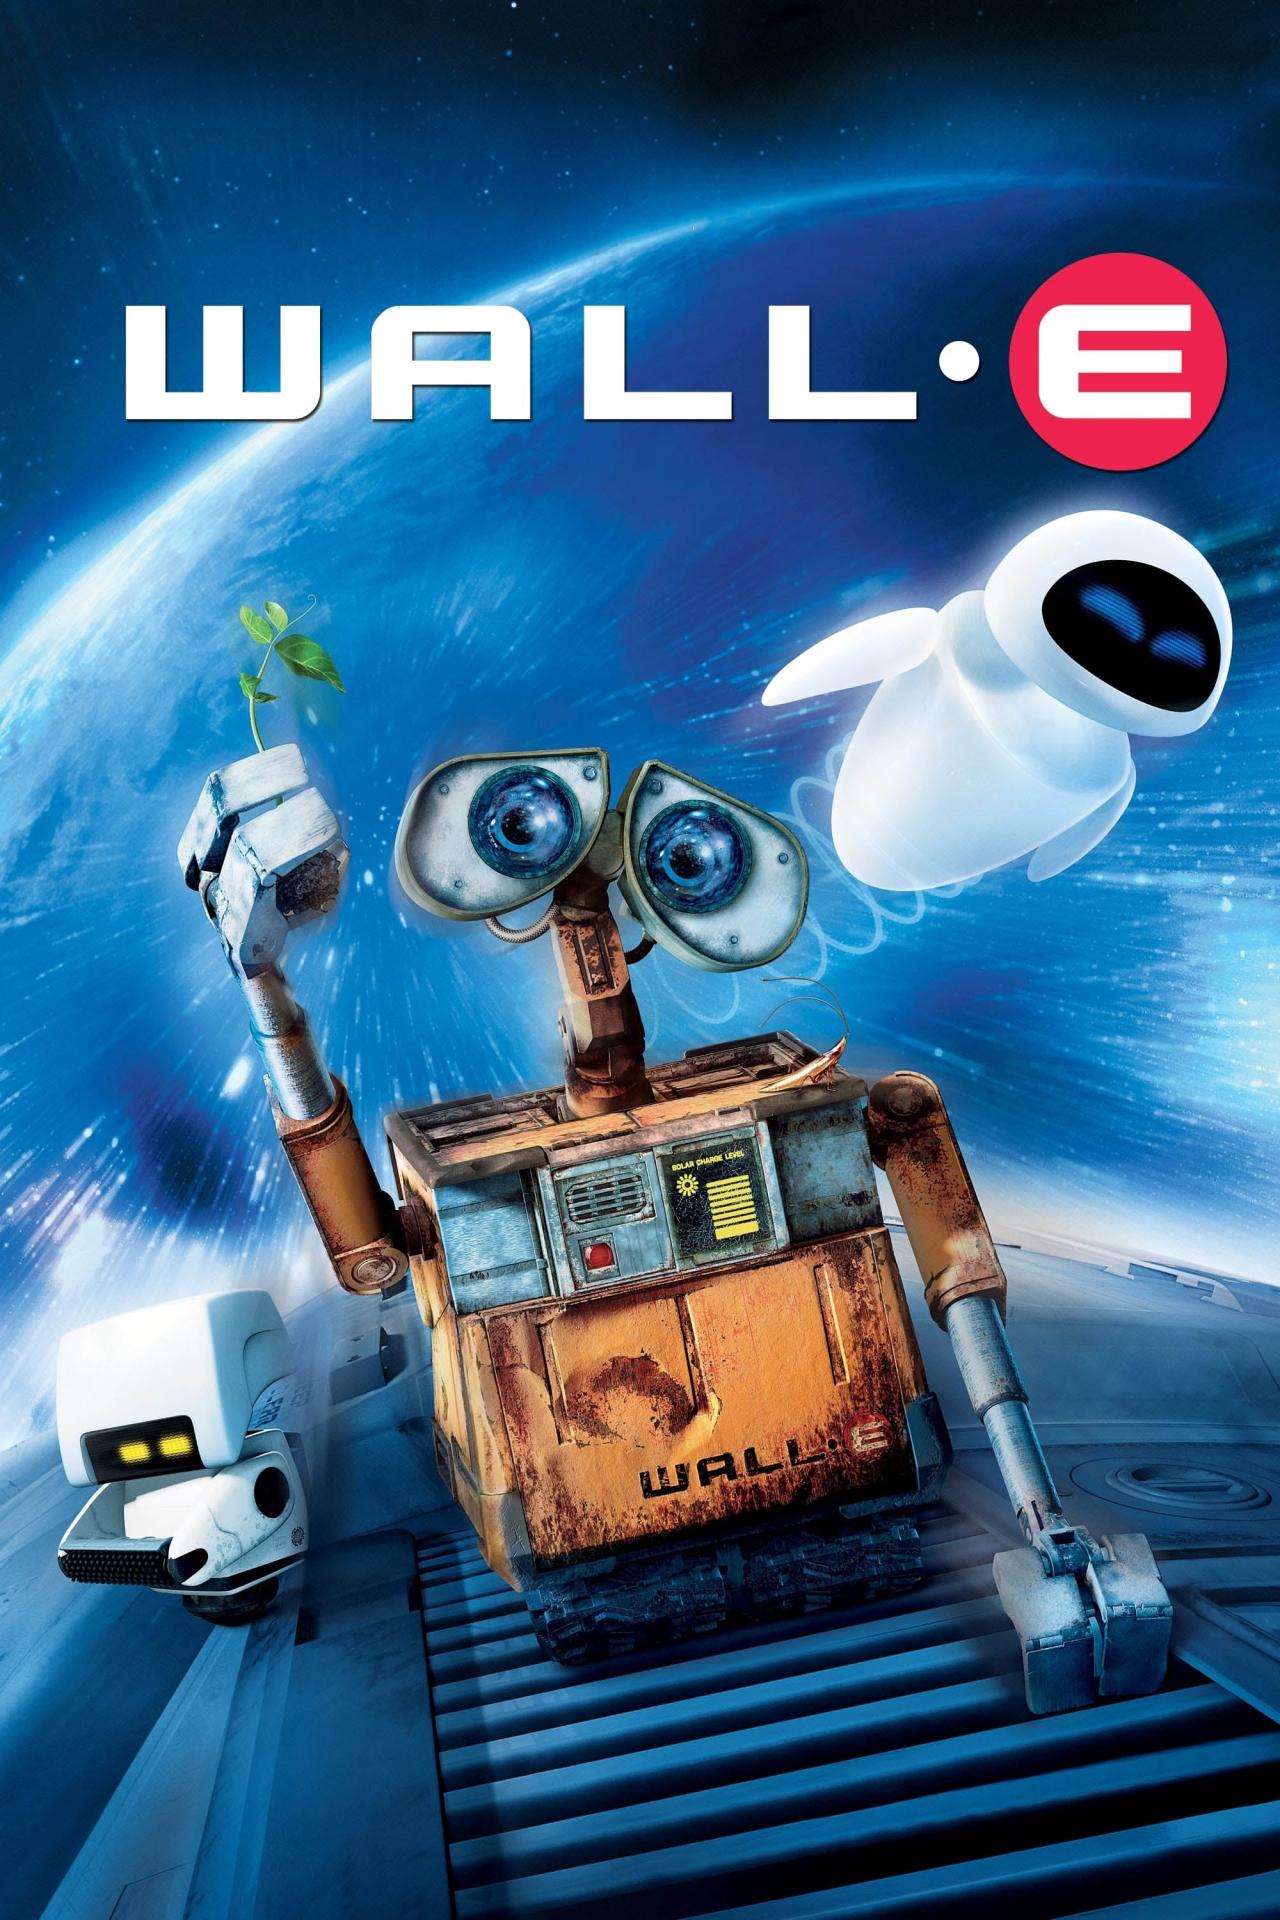 Affiche du film WALL·E